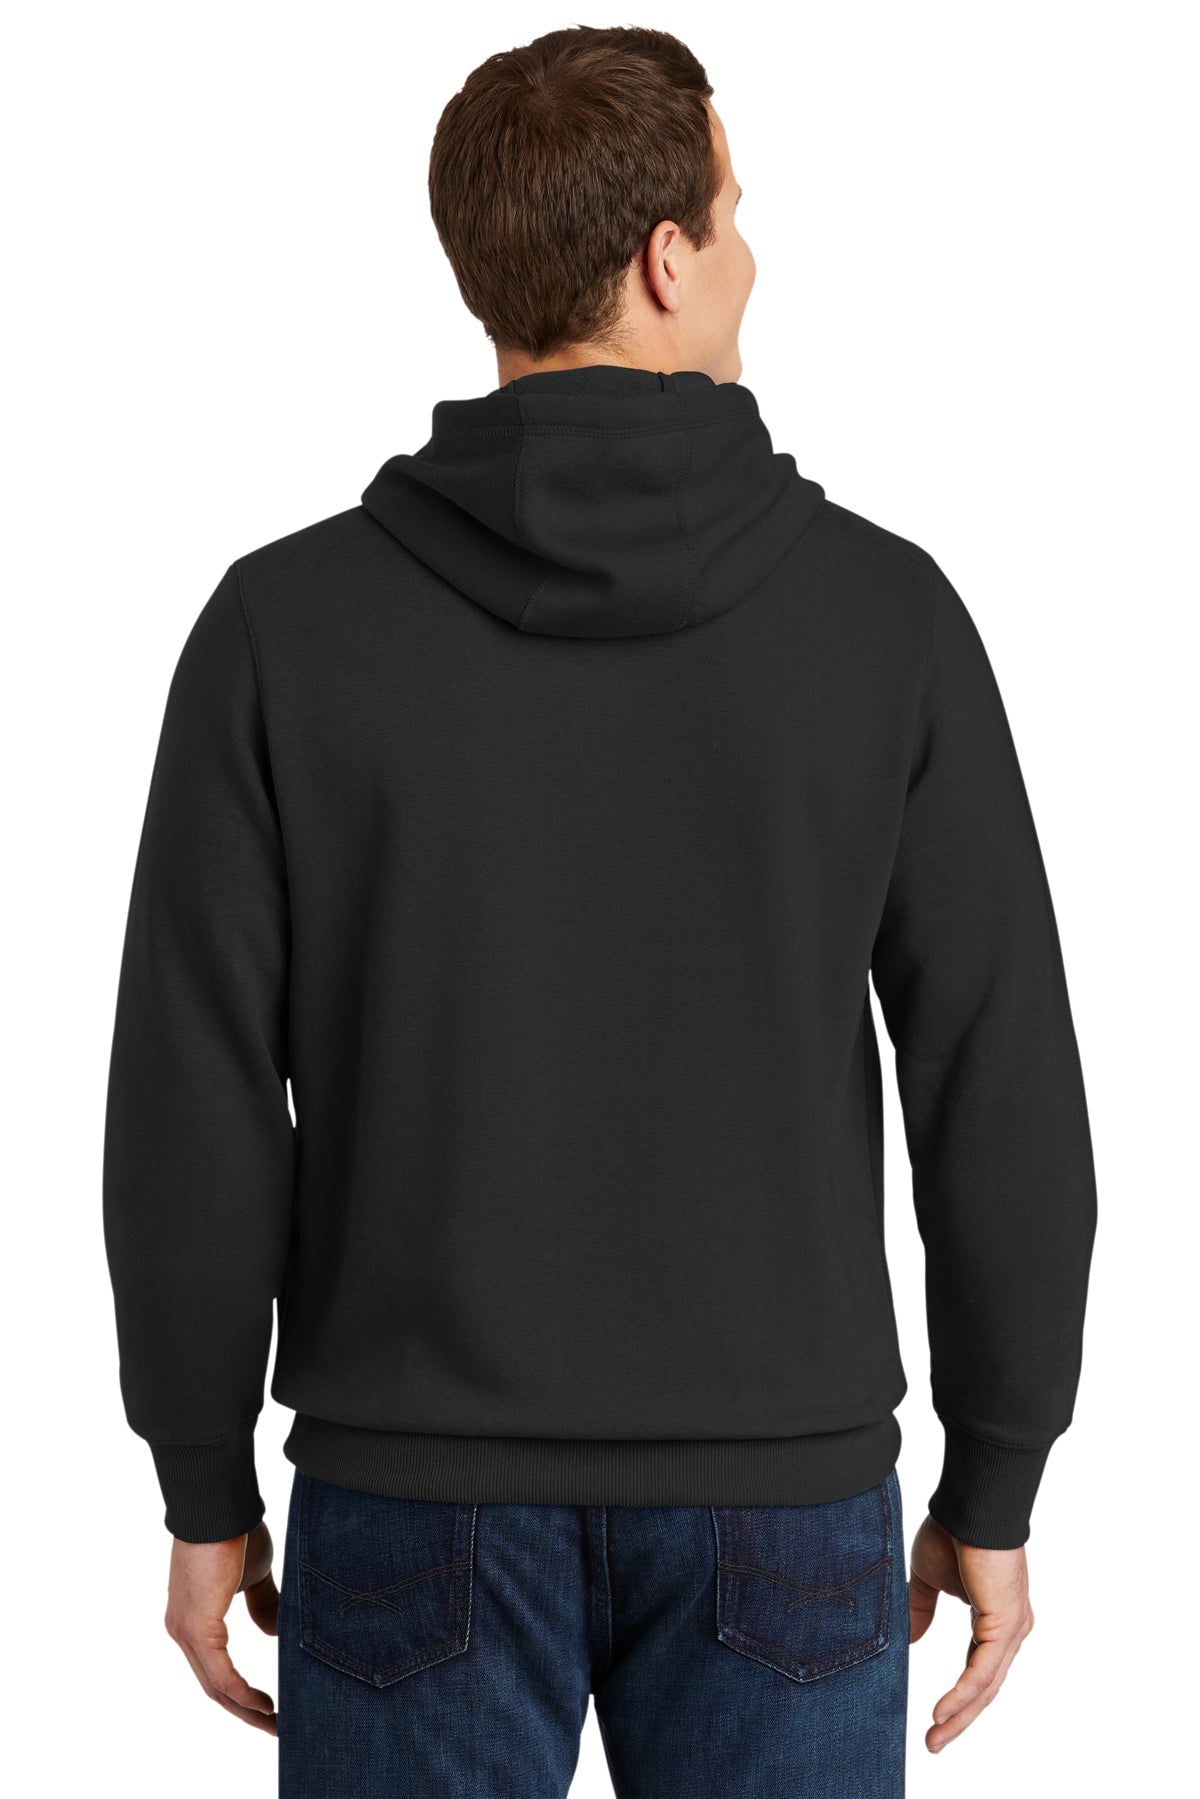 sport-tek_tst254 _black_company_logo_sweatshirts